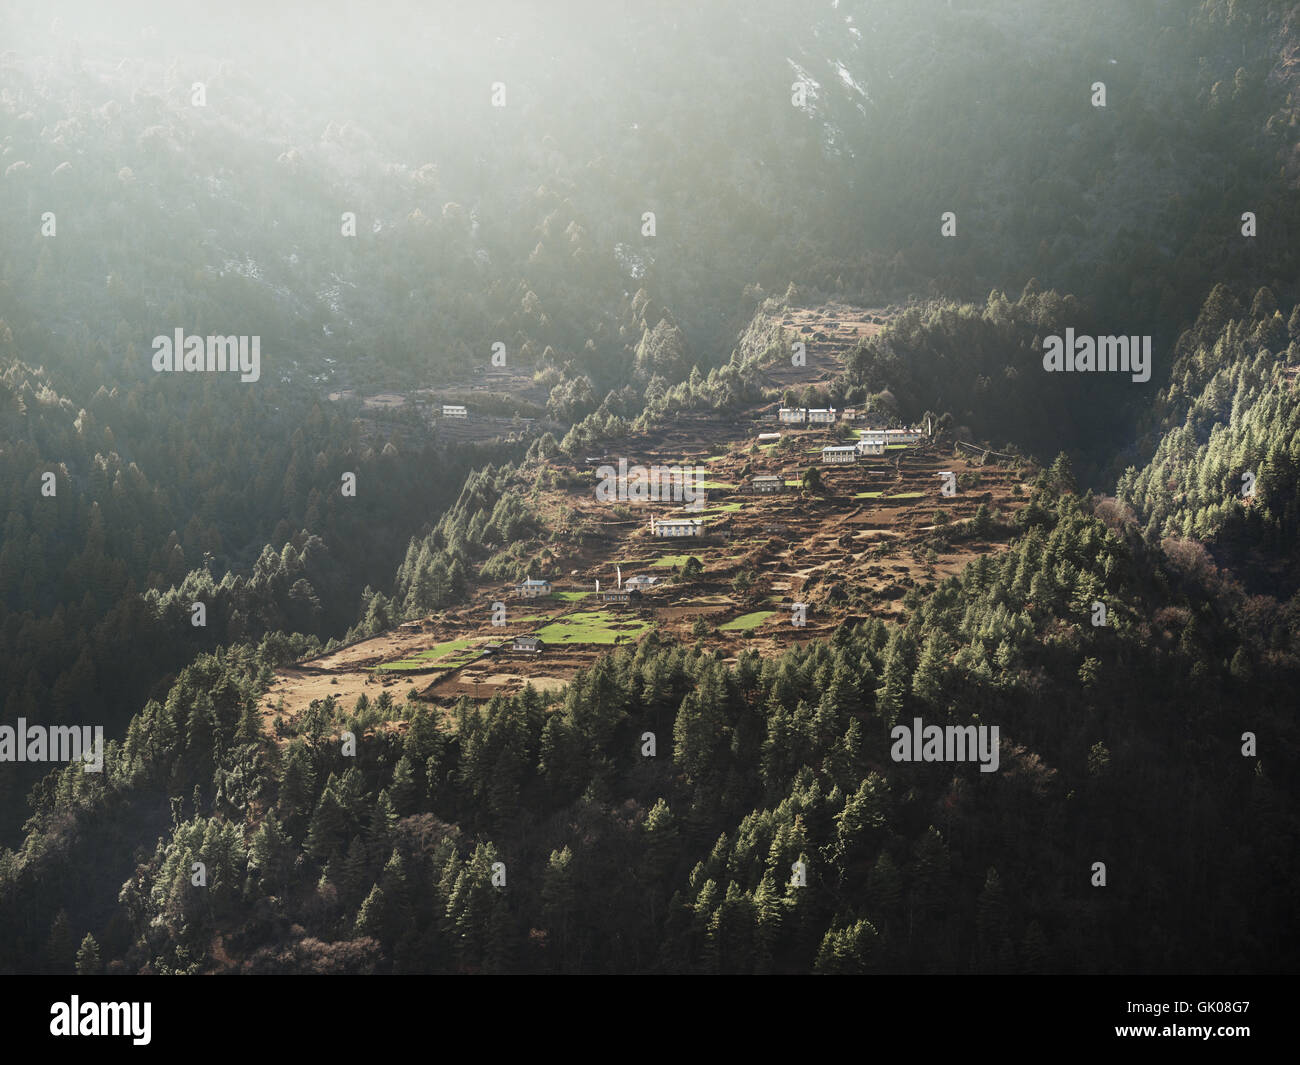 A mountain village near Lukla, Nepal in the Himalaya Mountain range as part of Everest Base Camp. Stock Photo